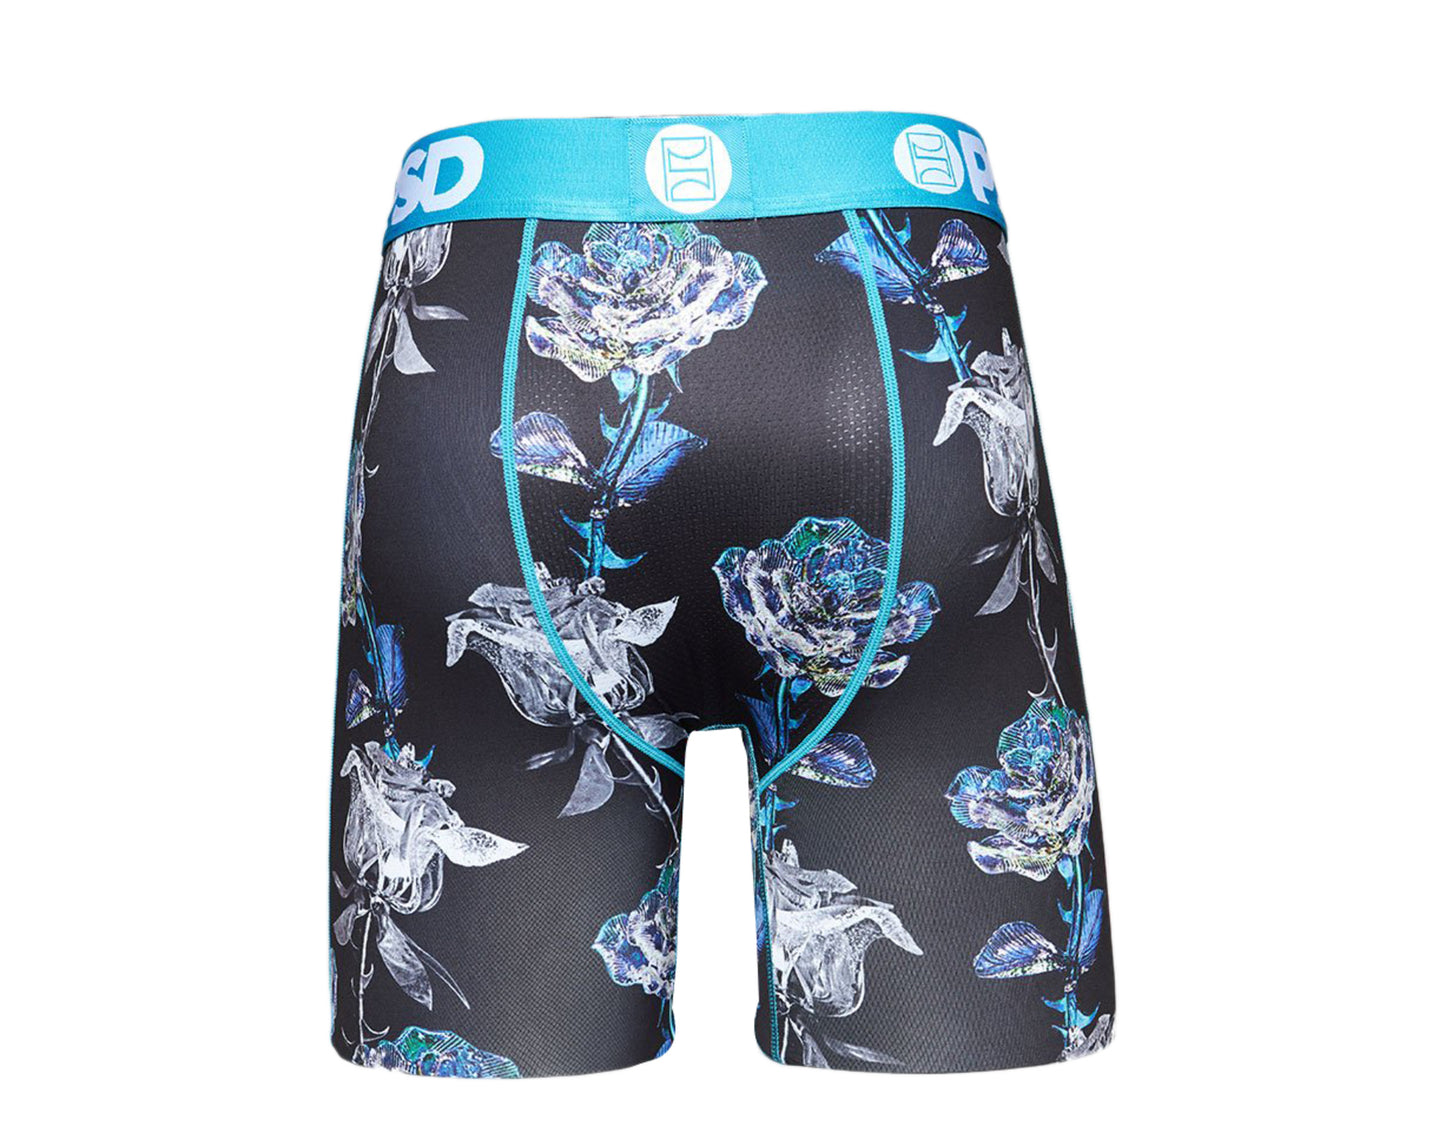 PSD Glass Roses Boxer Briefs Men's Underwear